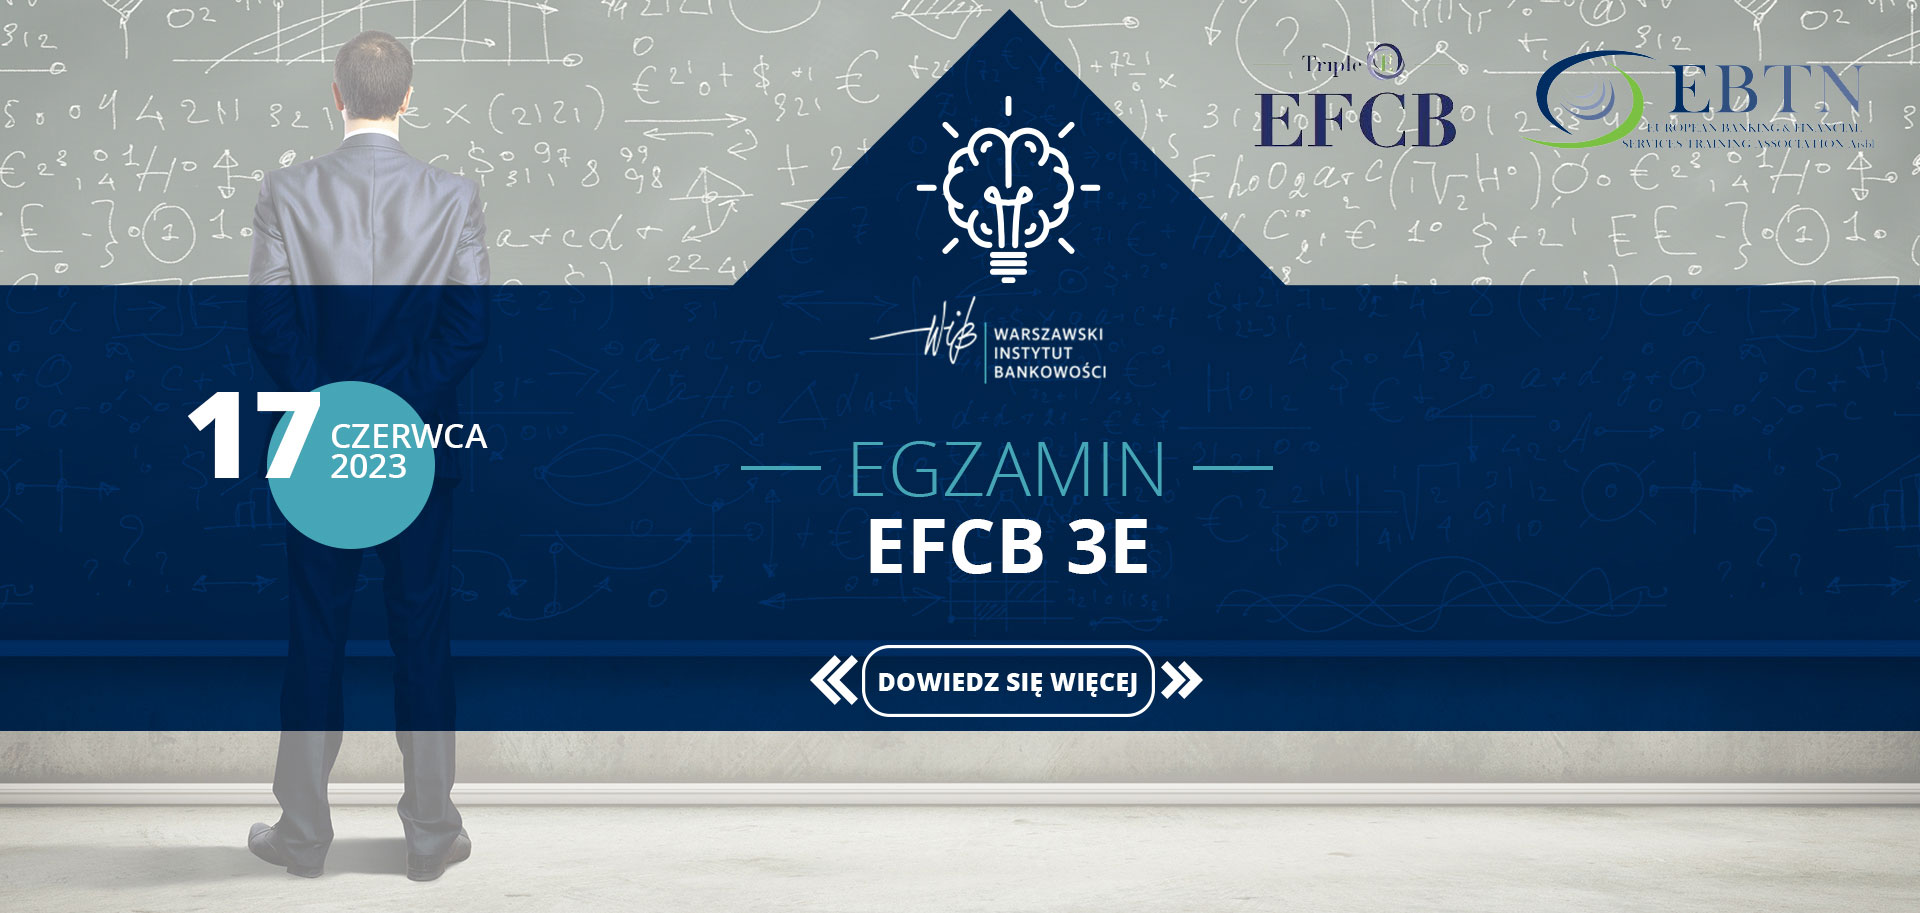 Egzamin EFCB 3E - 17 czerwca 2023 r.